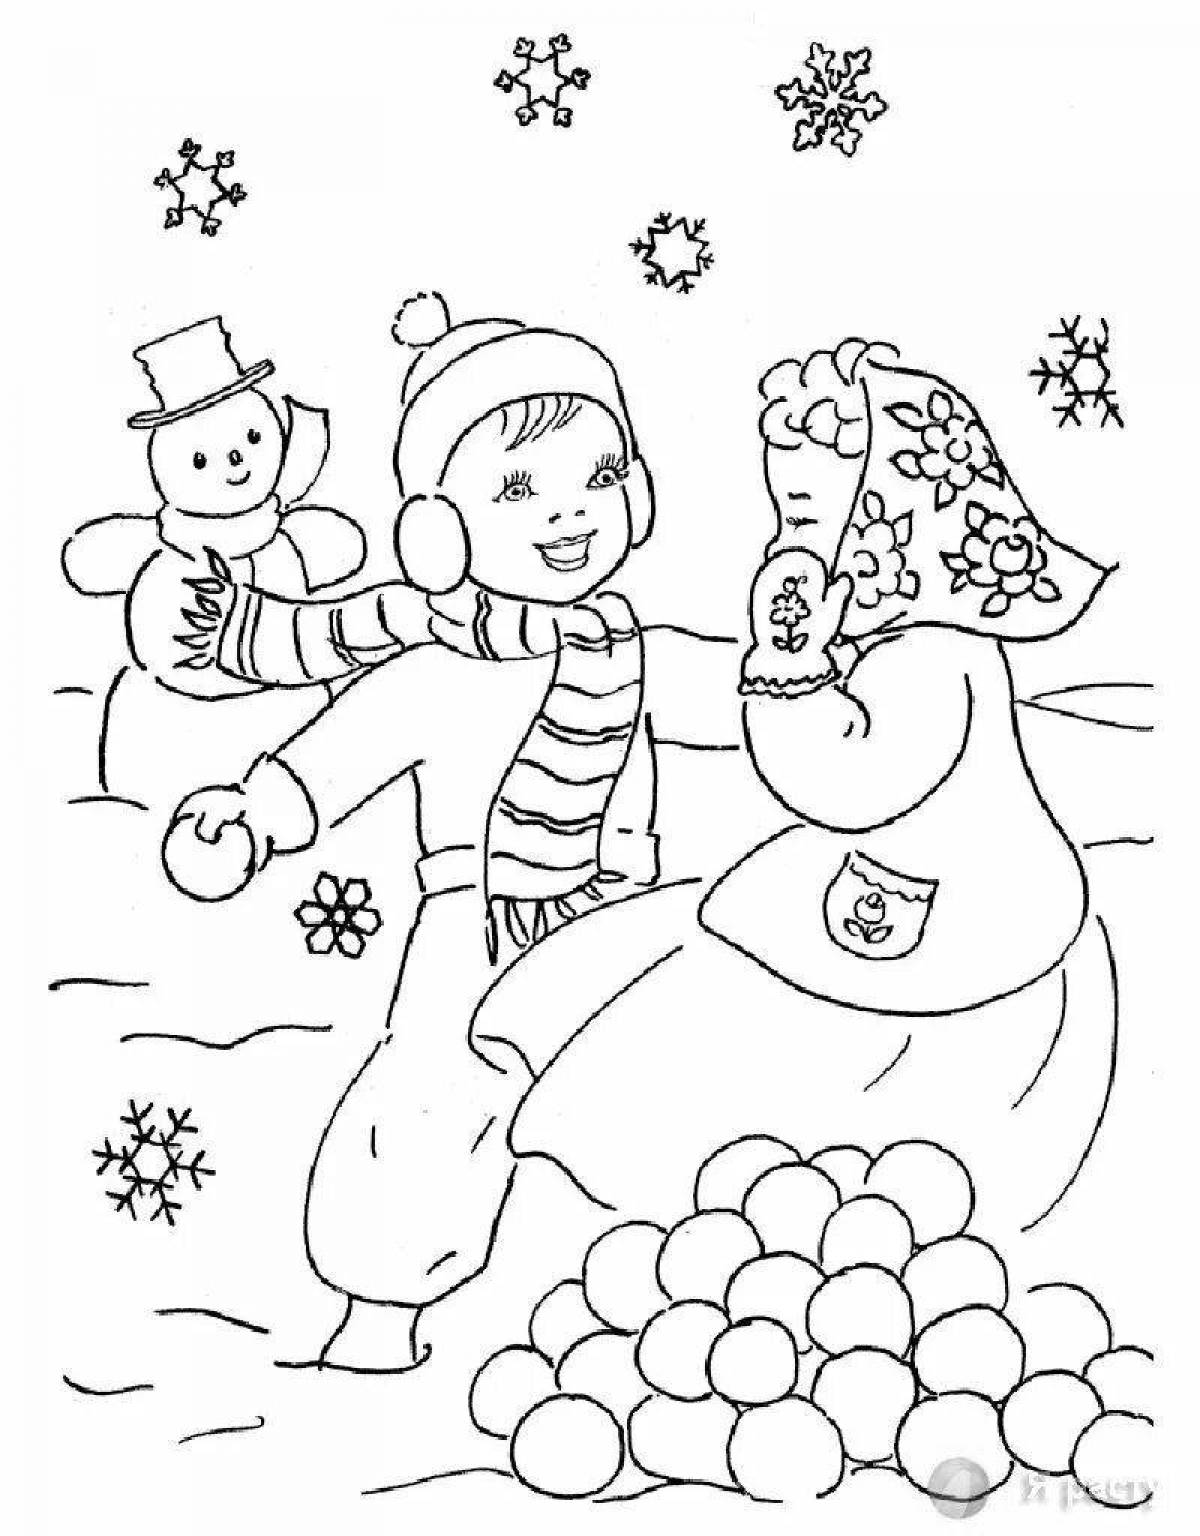 Coloring page joyful children playing snowballs